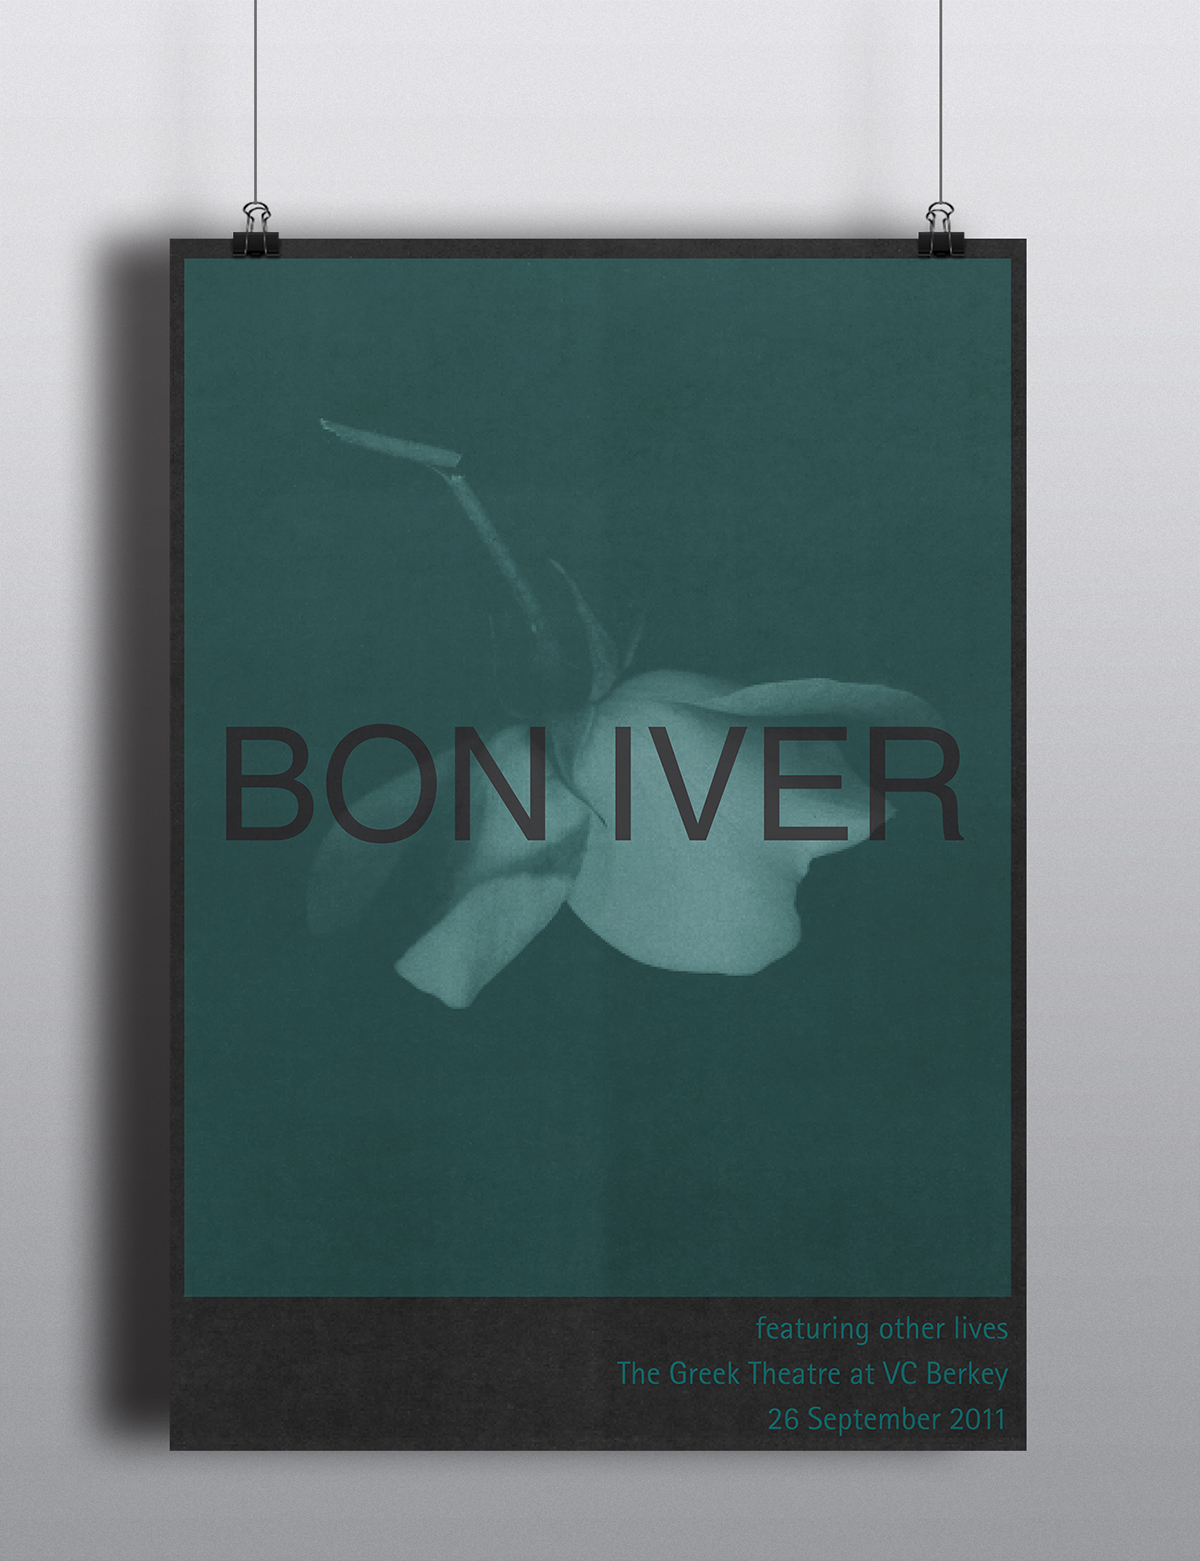 Schallplatte poster bon iver band record cover album cover vinyl cover design